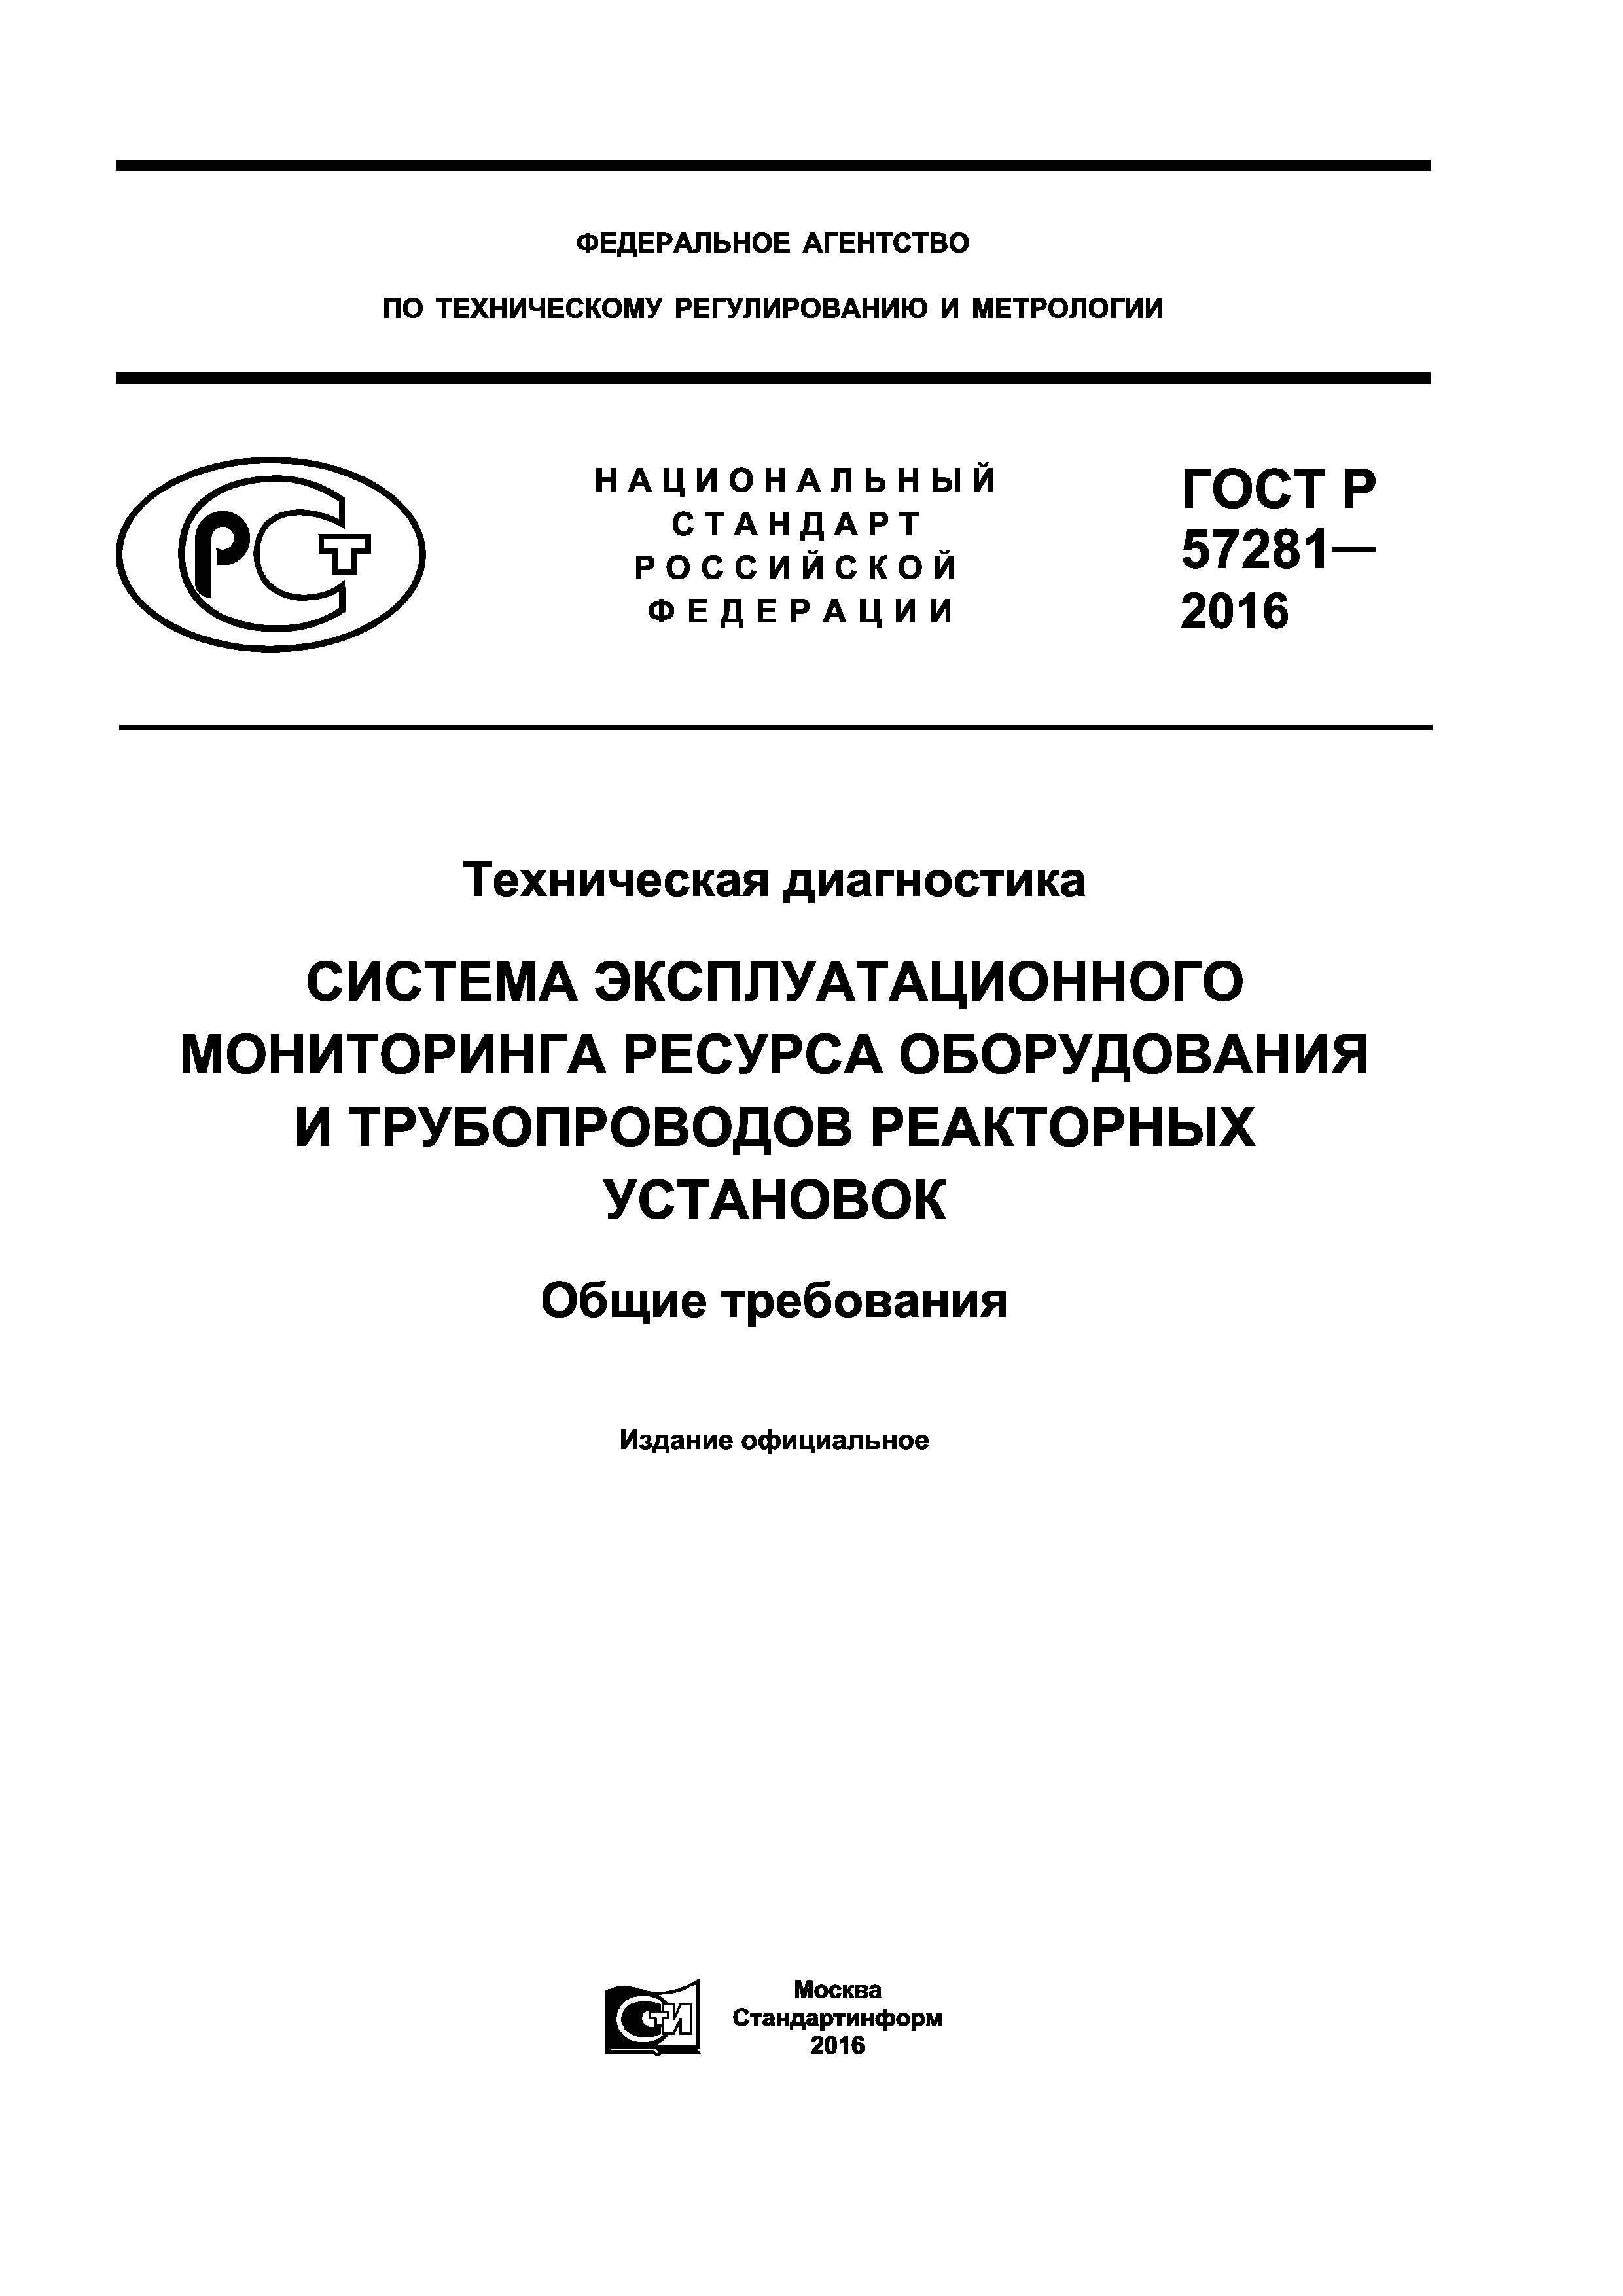 ГОСТ Р 57281-2016